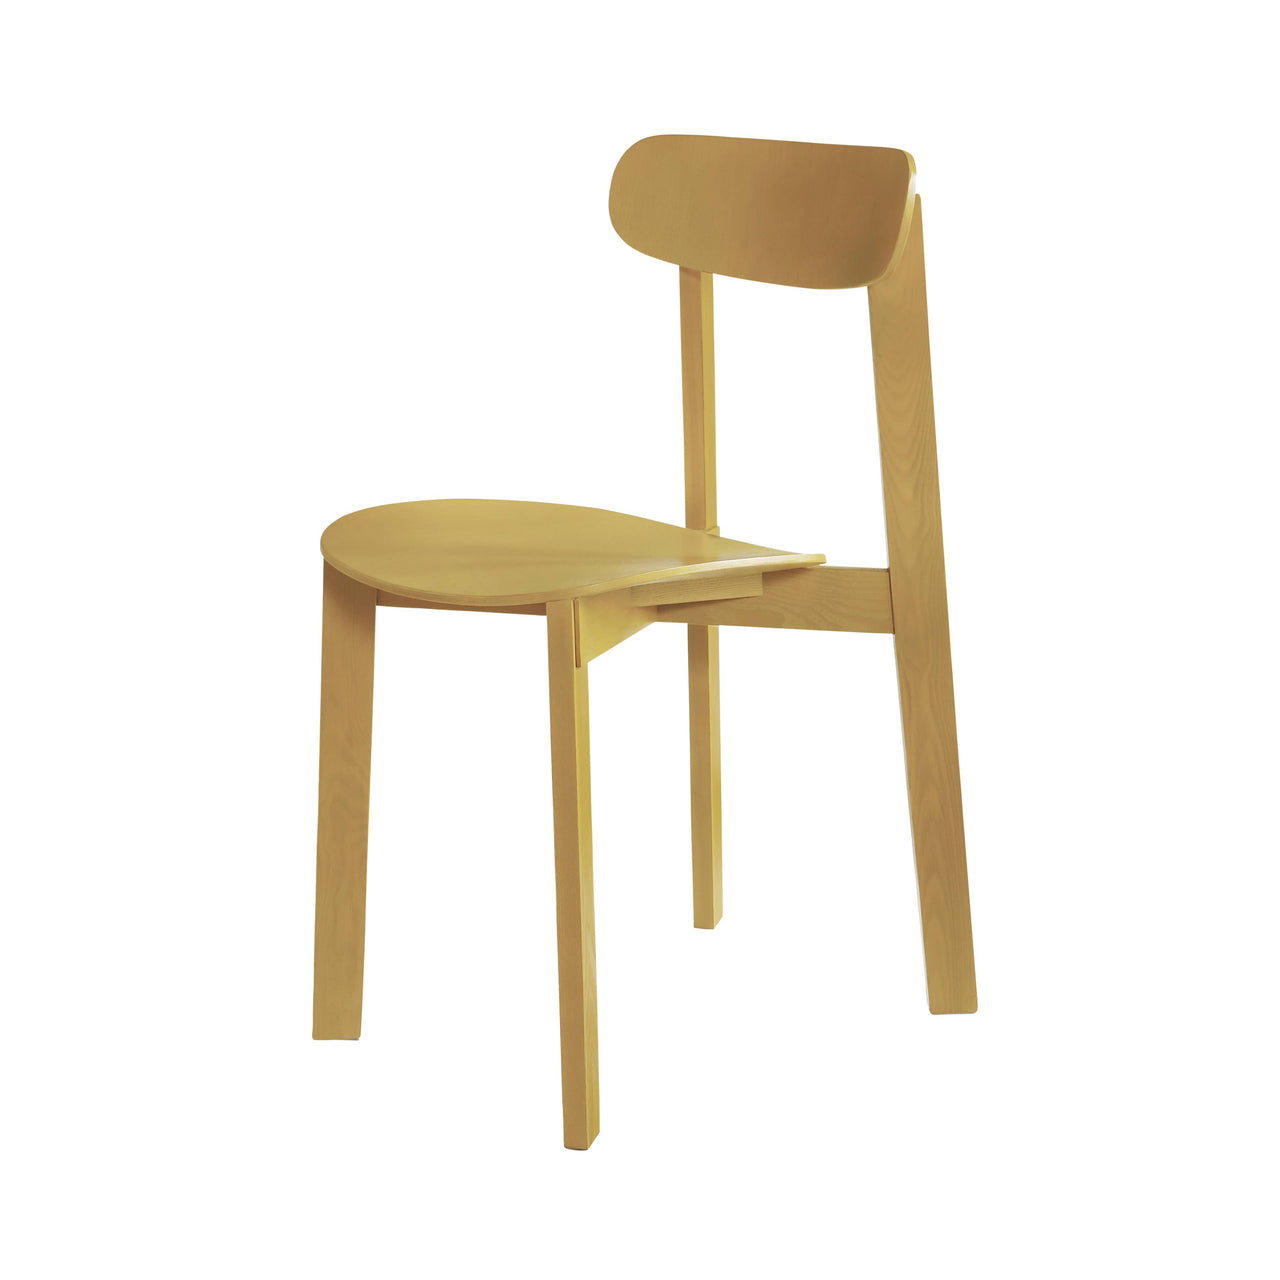 Bondi Chair: Turmeric Yellow